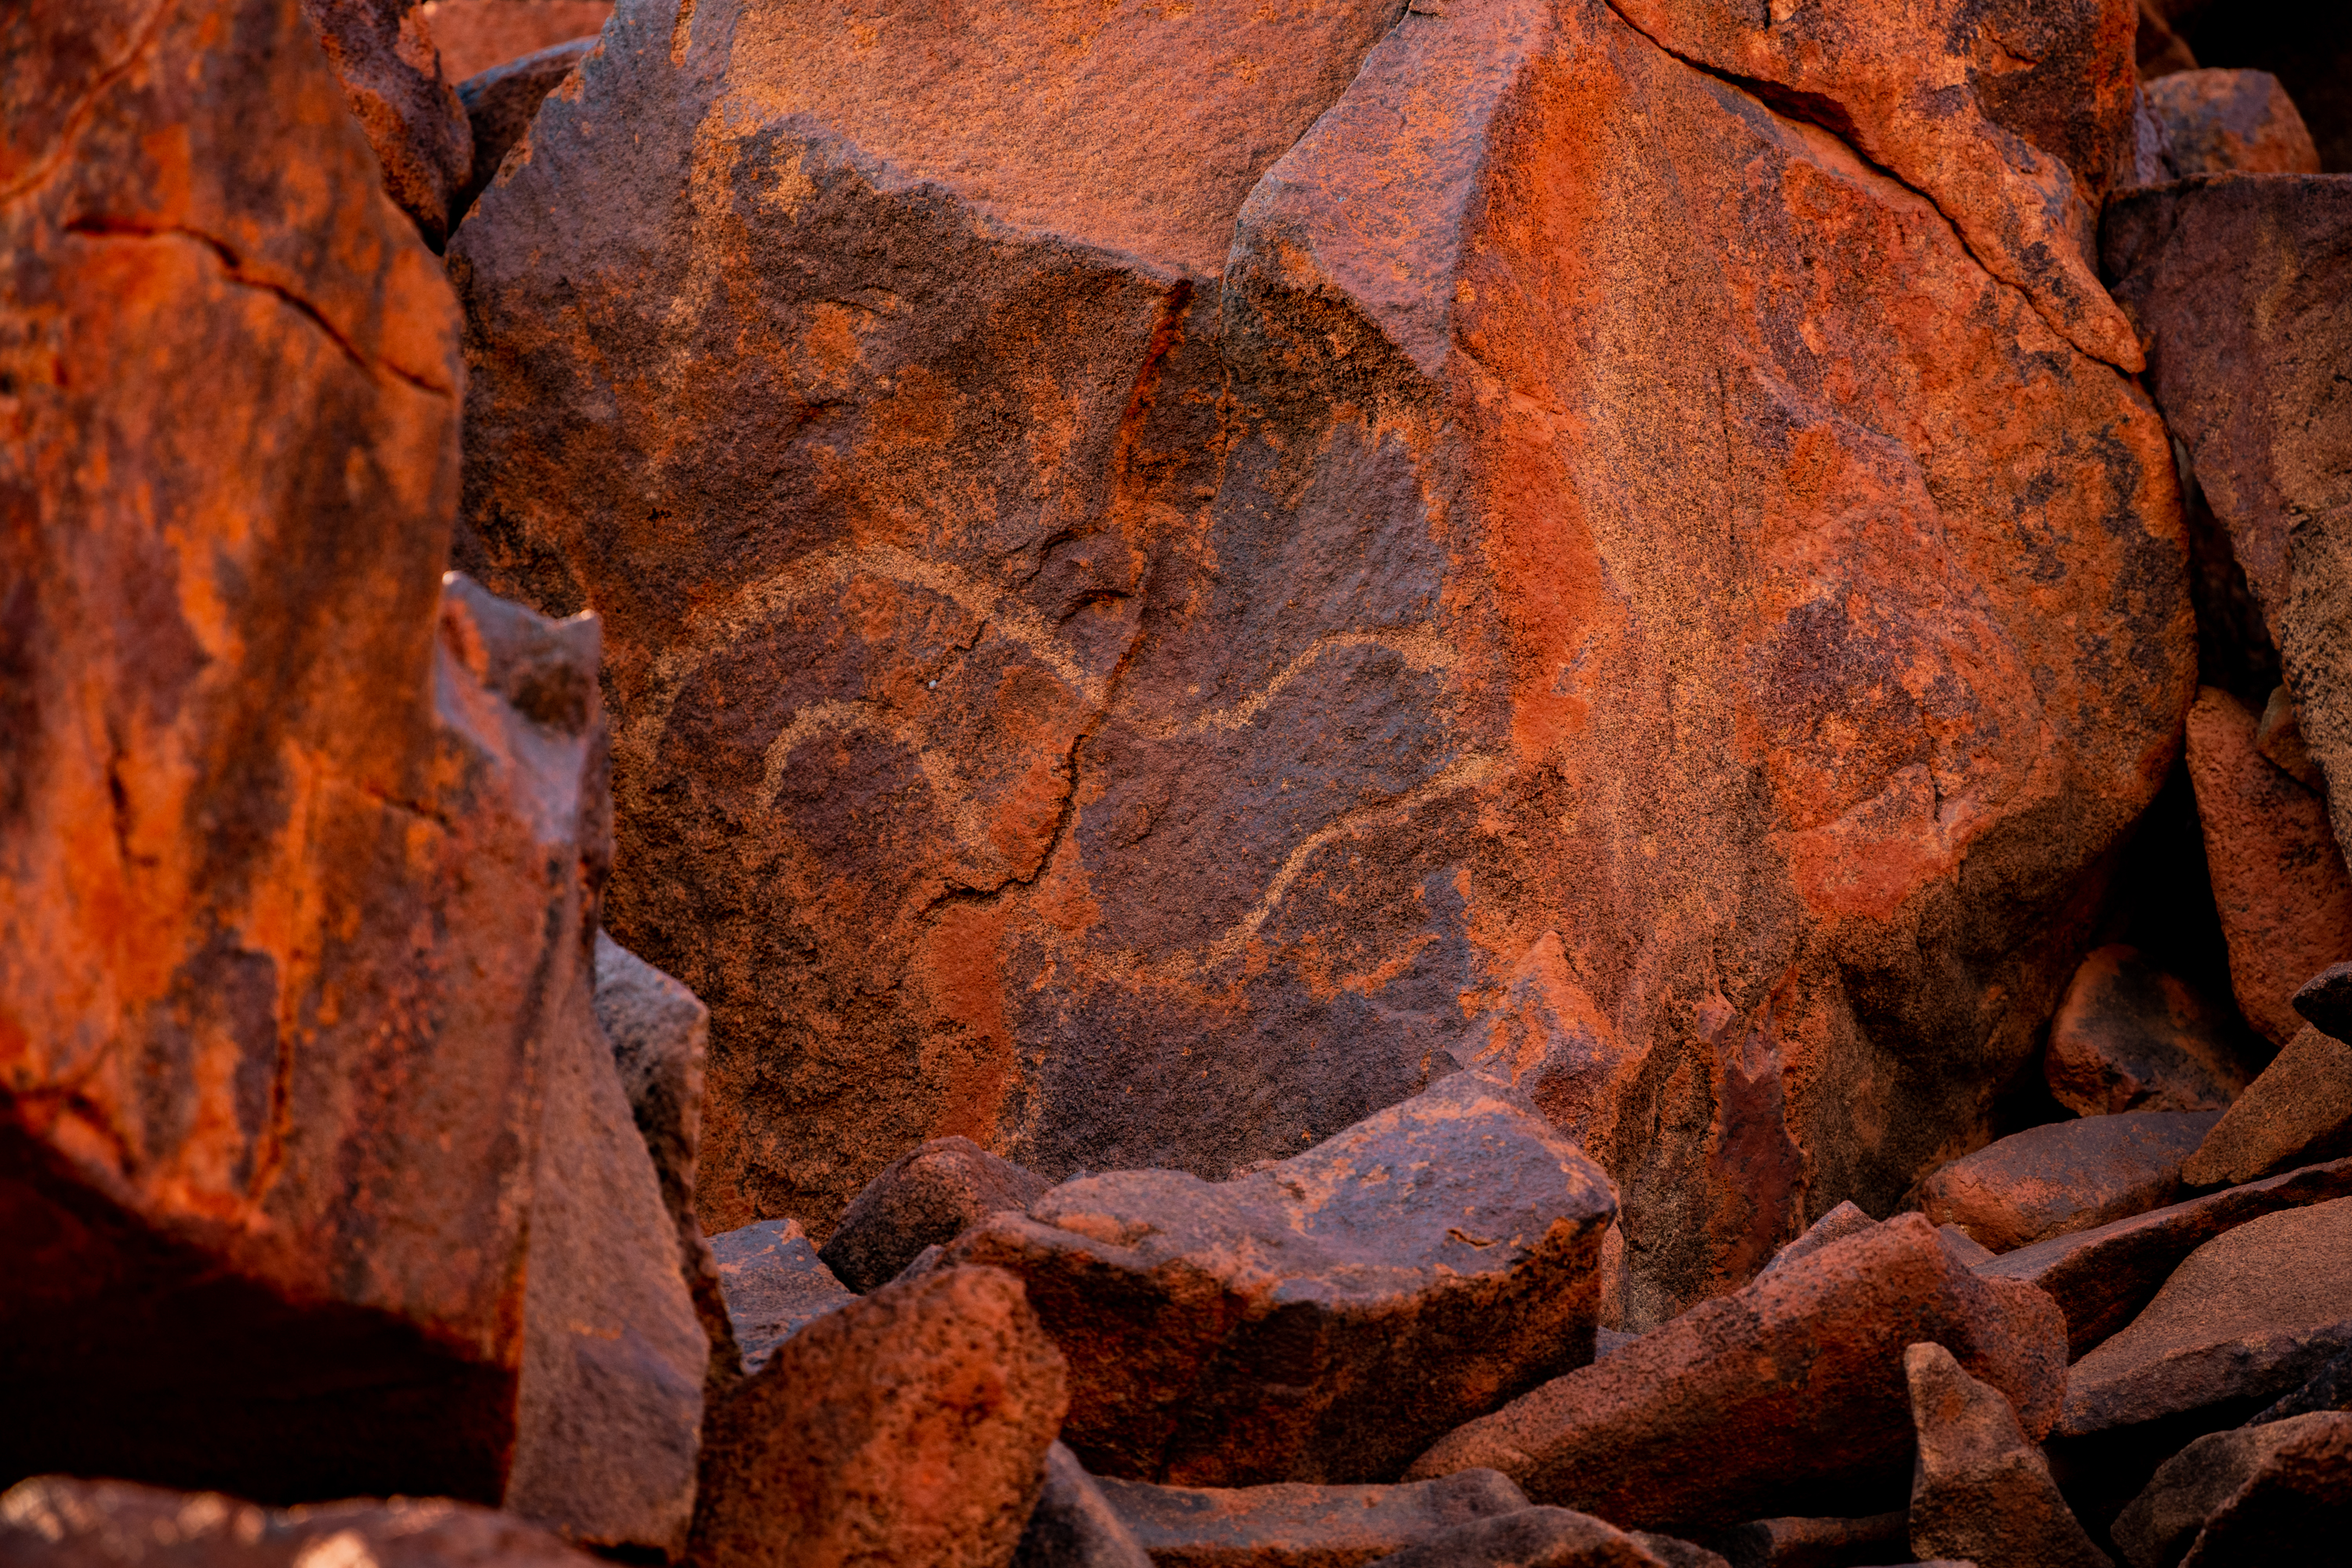 Burrup 半岛上的岩石艺术，描绘了一条蛇。